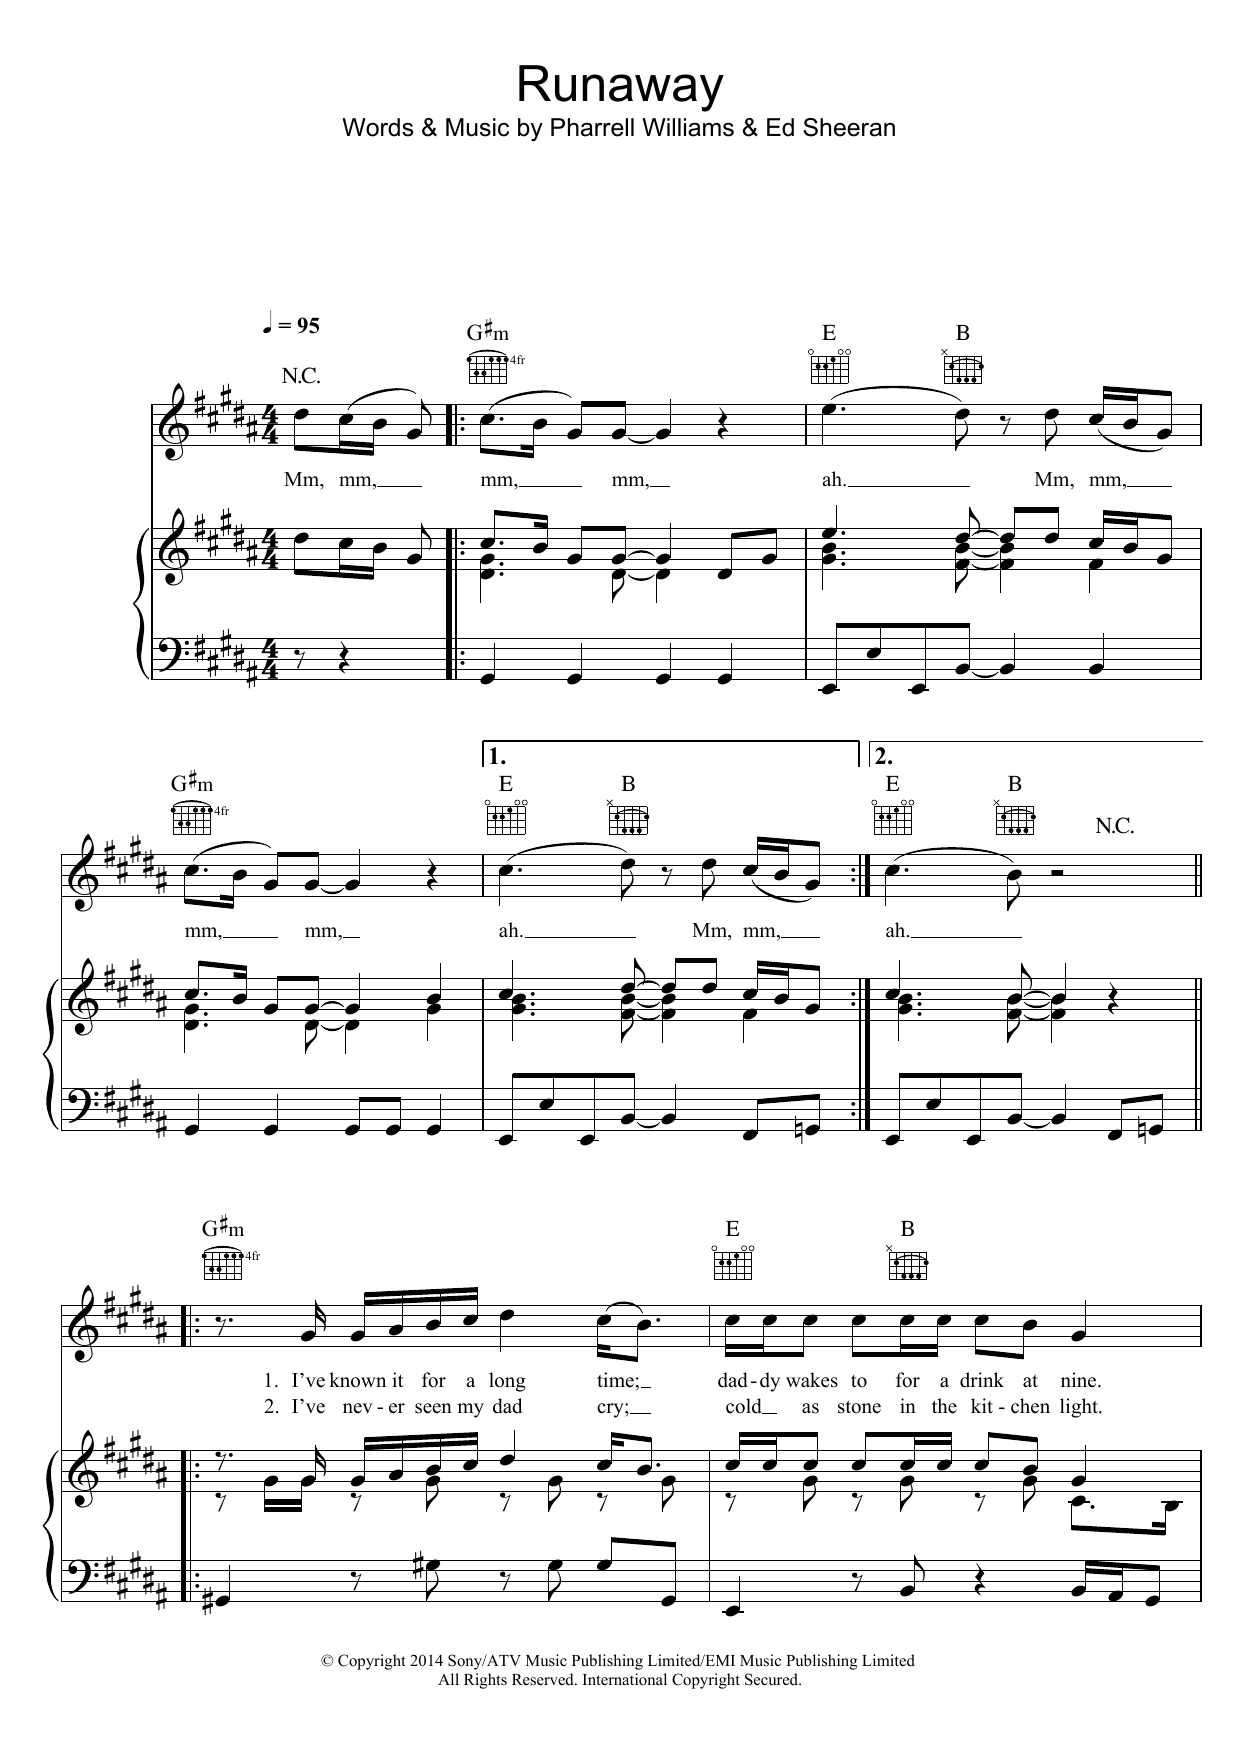 Ed Sheeran Runaway sheet music notes and chords arranged for Guitar Chords/Lyrics